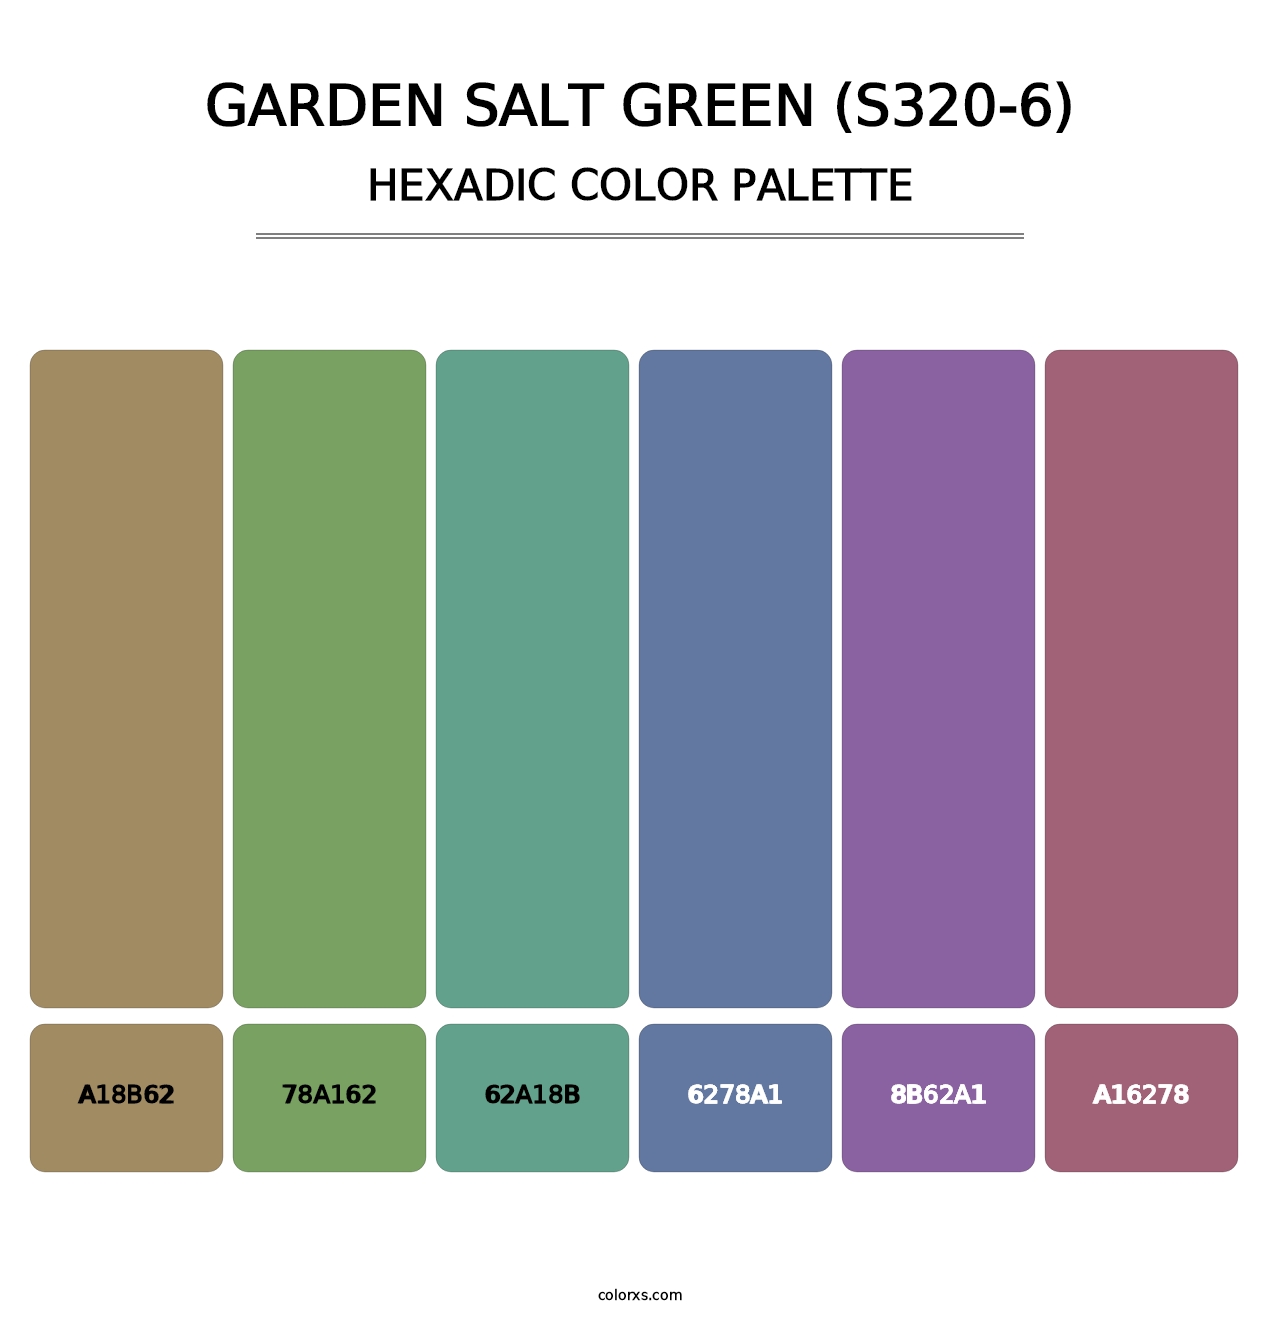 Garden Salt Green (S320-6) - Hexadic Color Palette